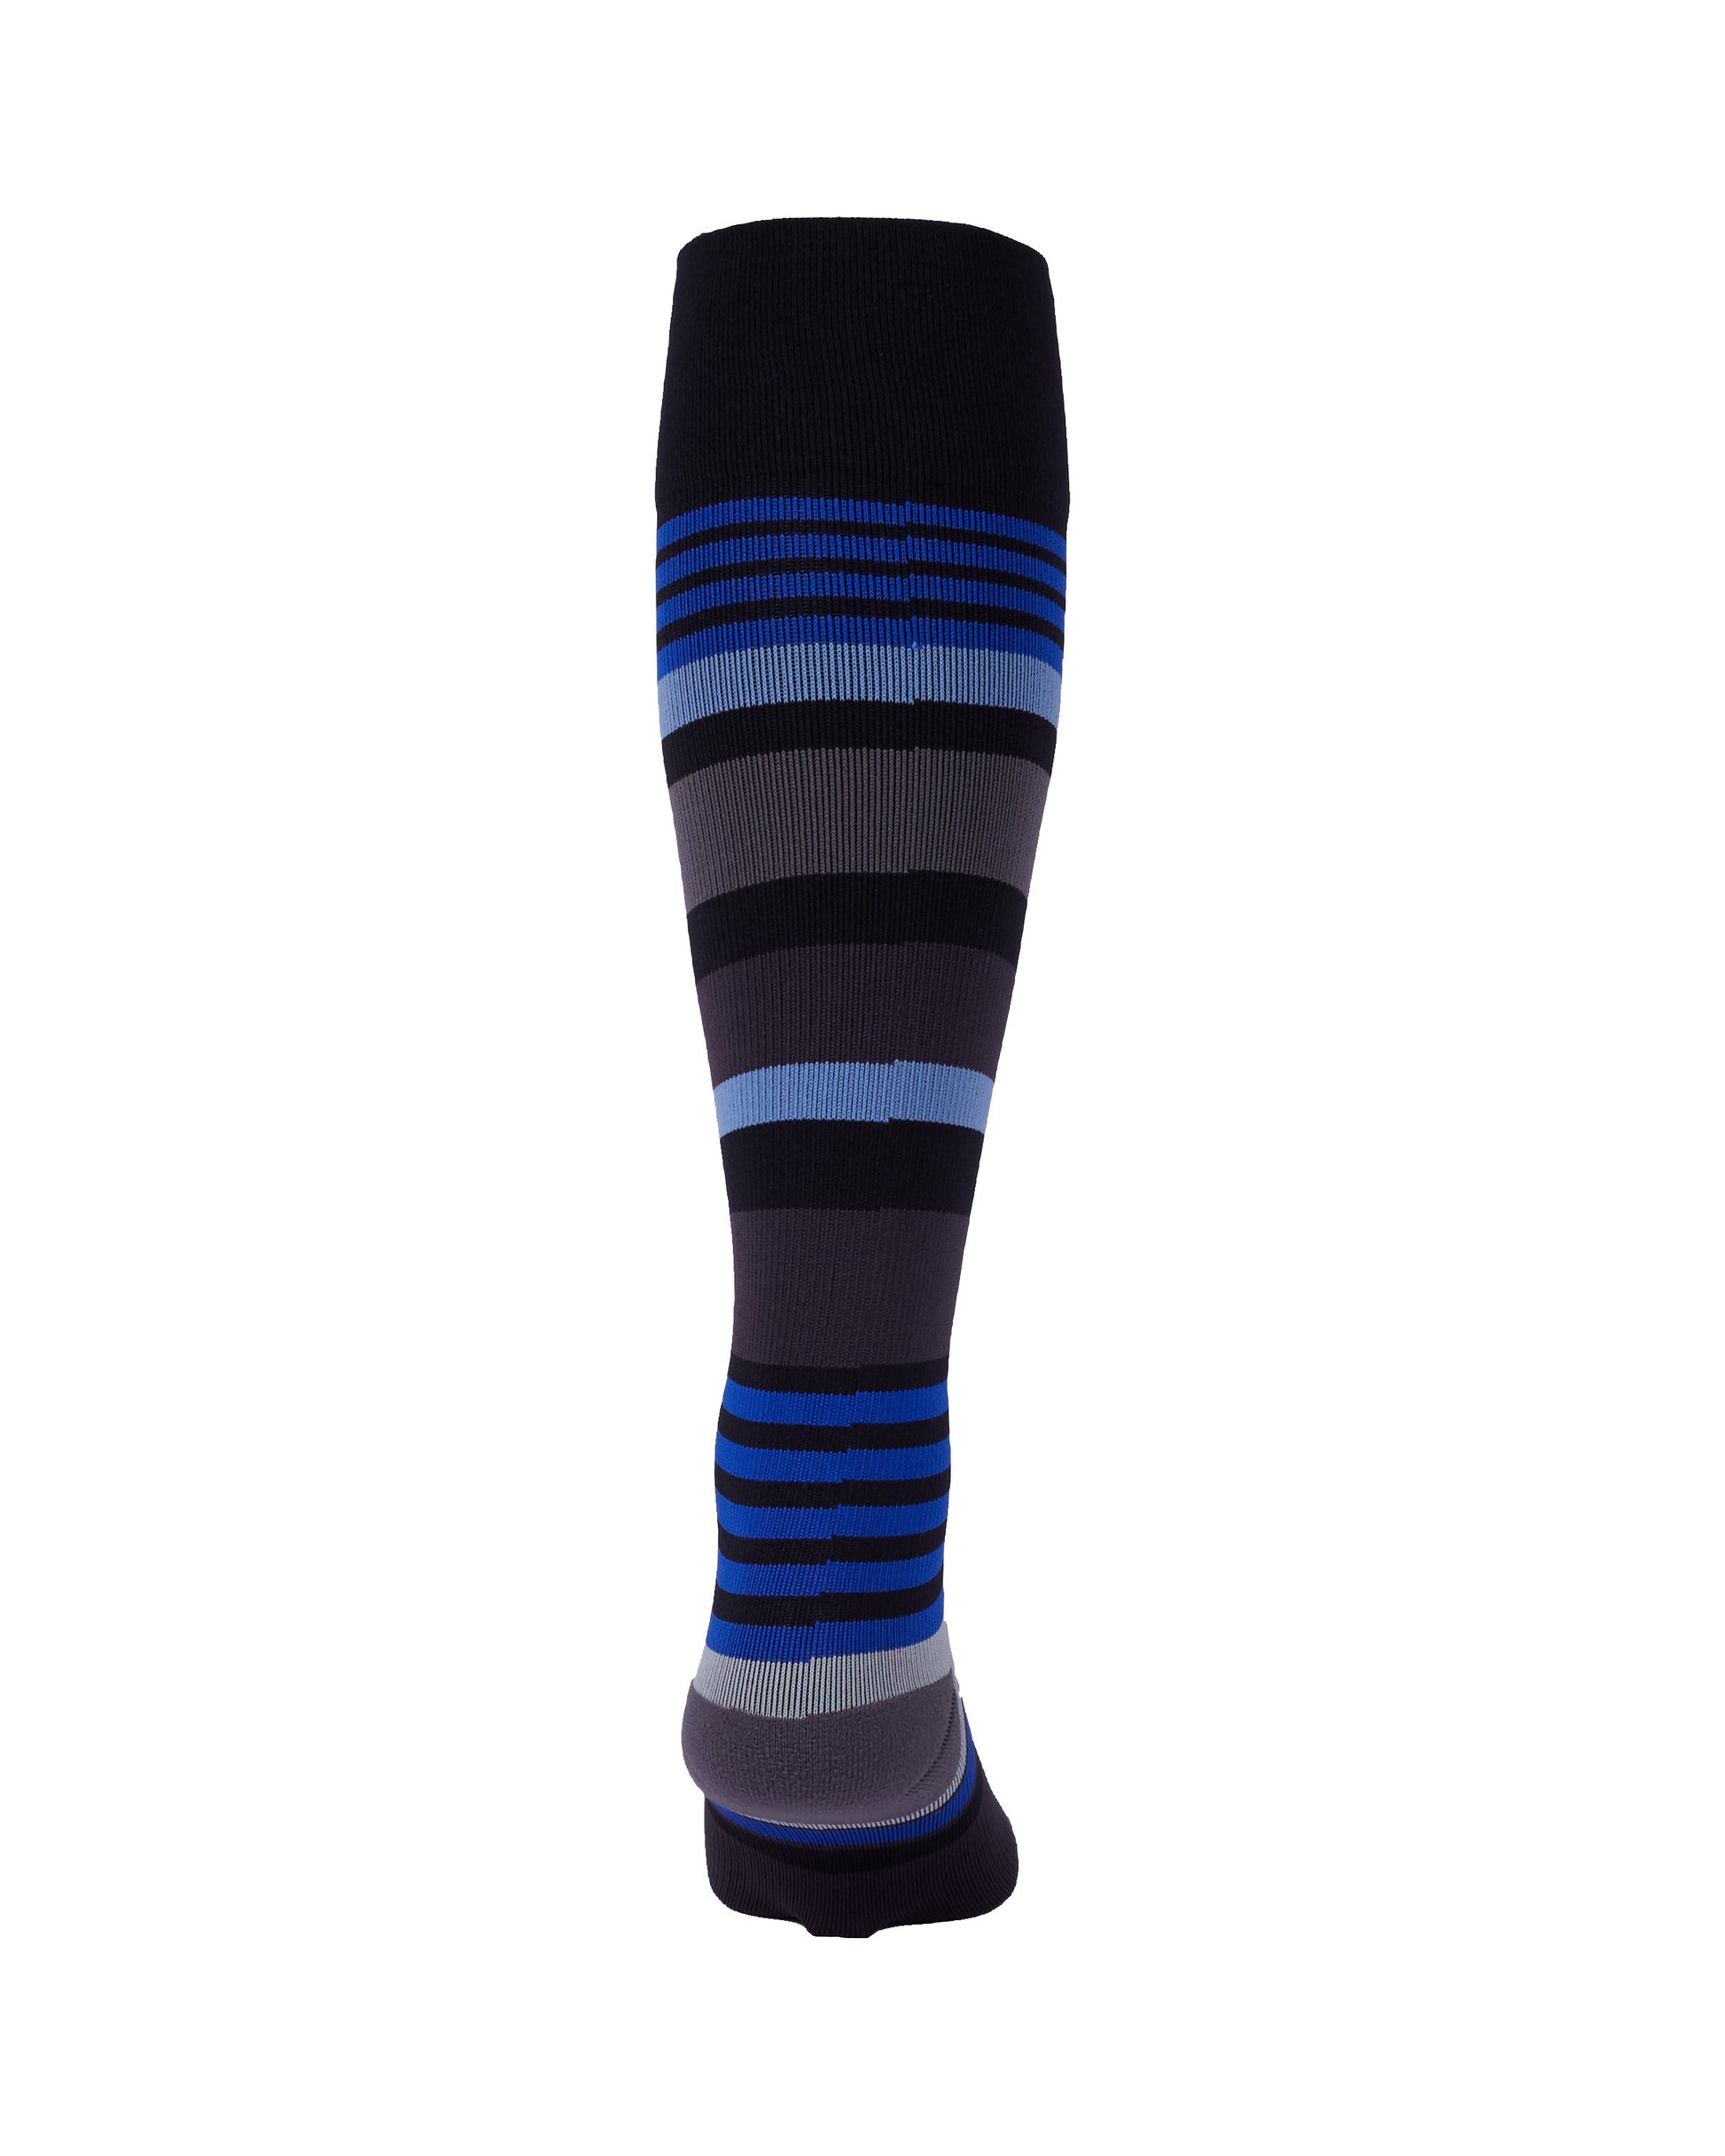 Rejuva® Camo Knee High 15-20 mmHg – Compression Stockings